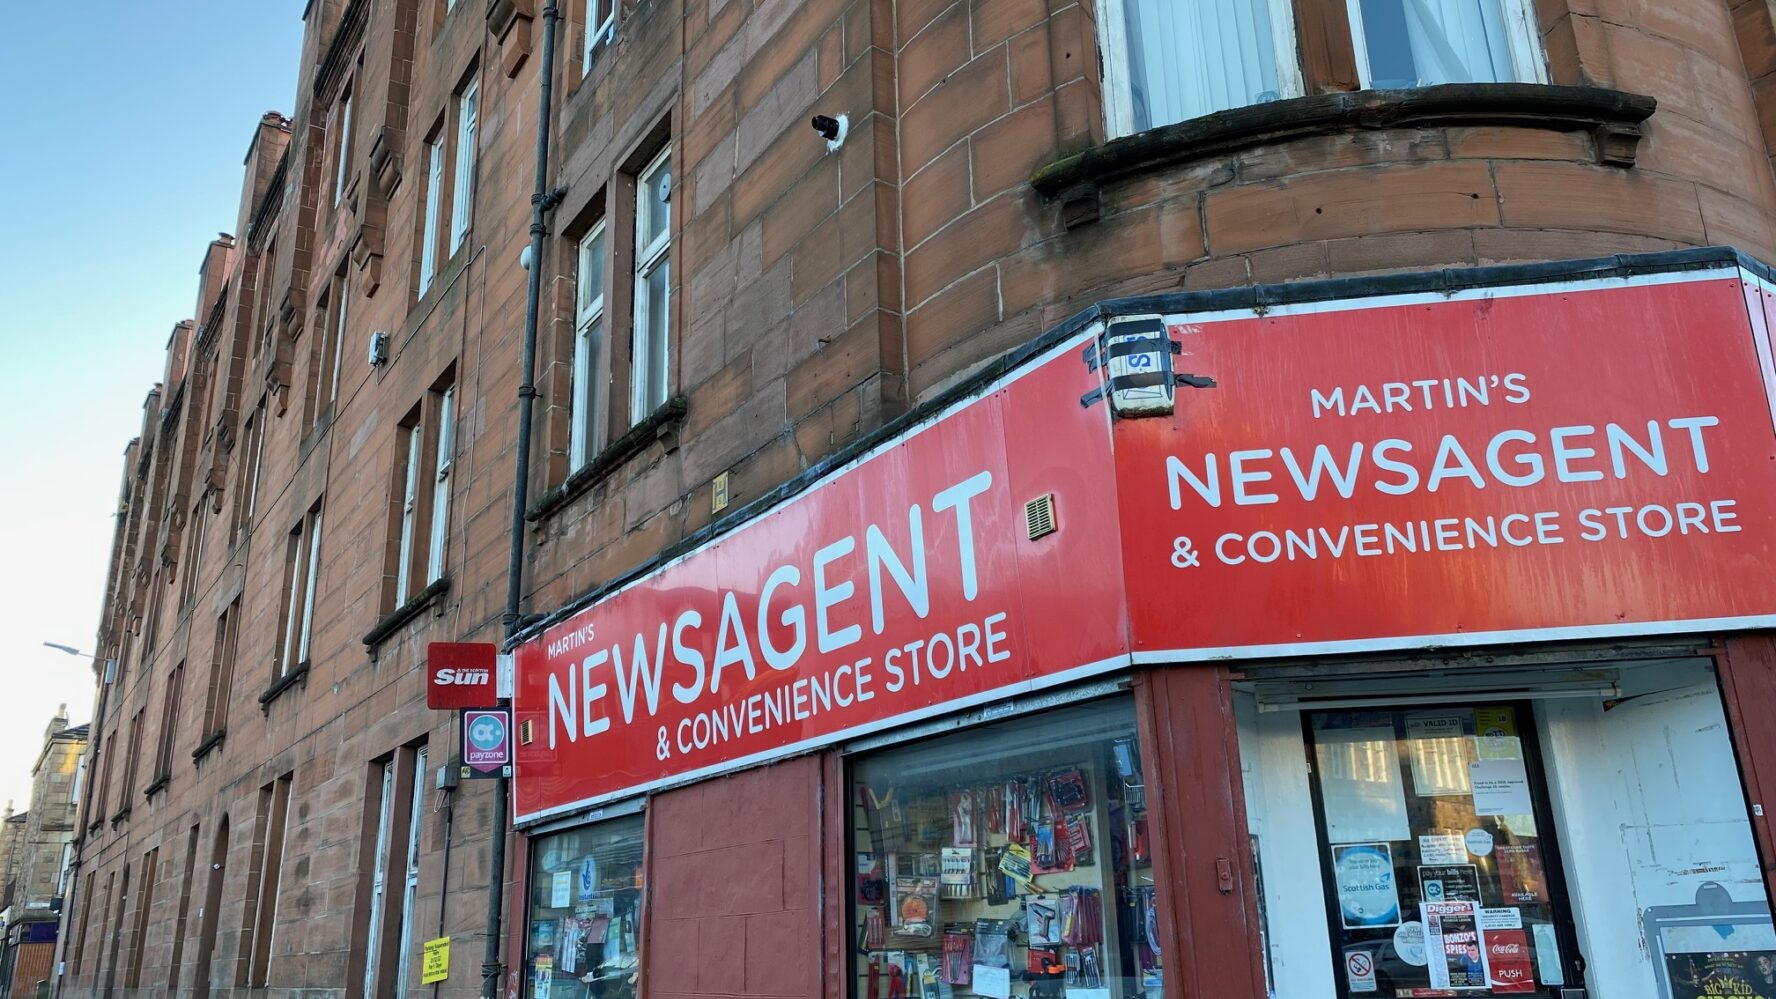 A newsagent shopfront in Glasgow